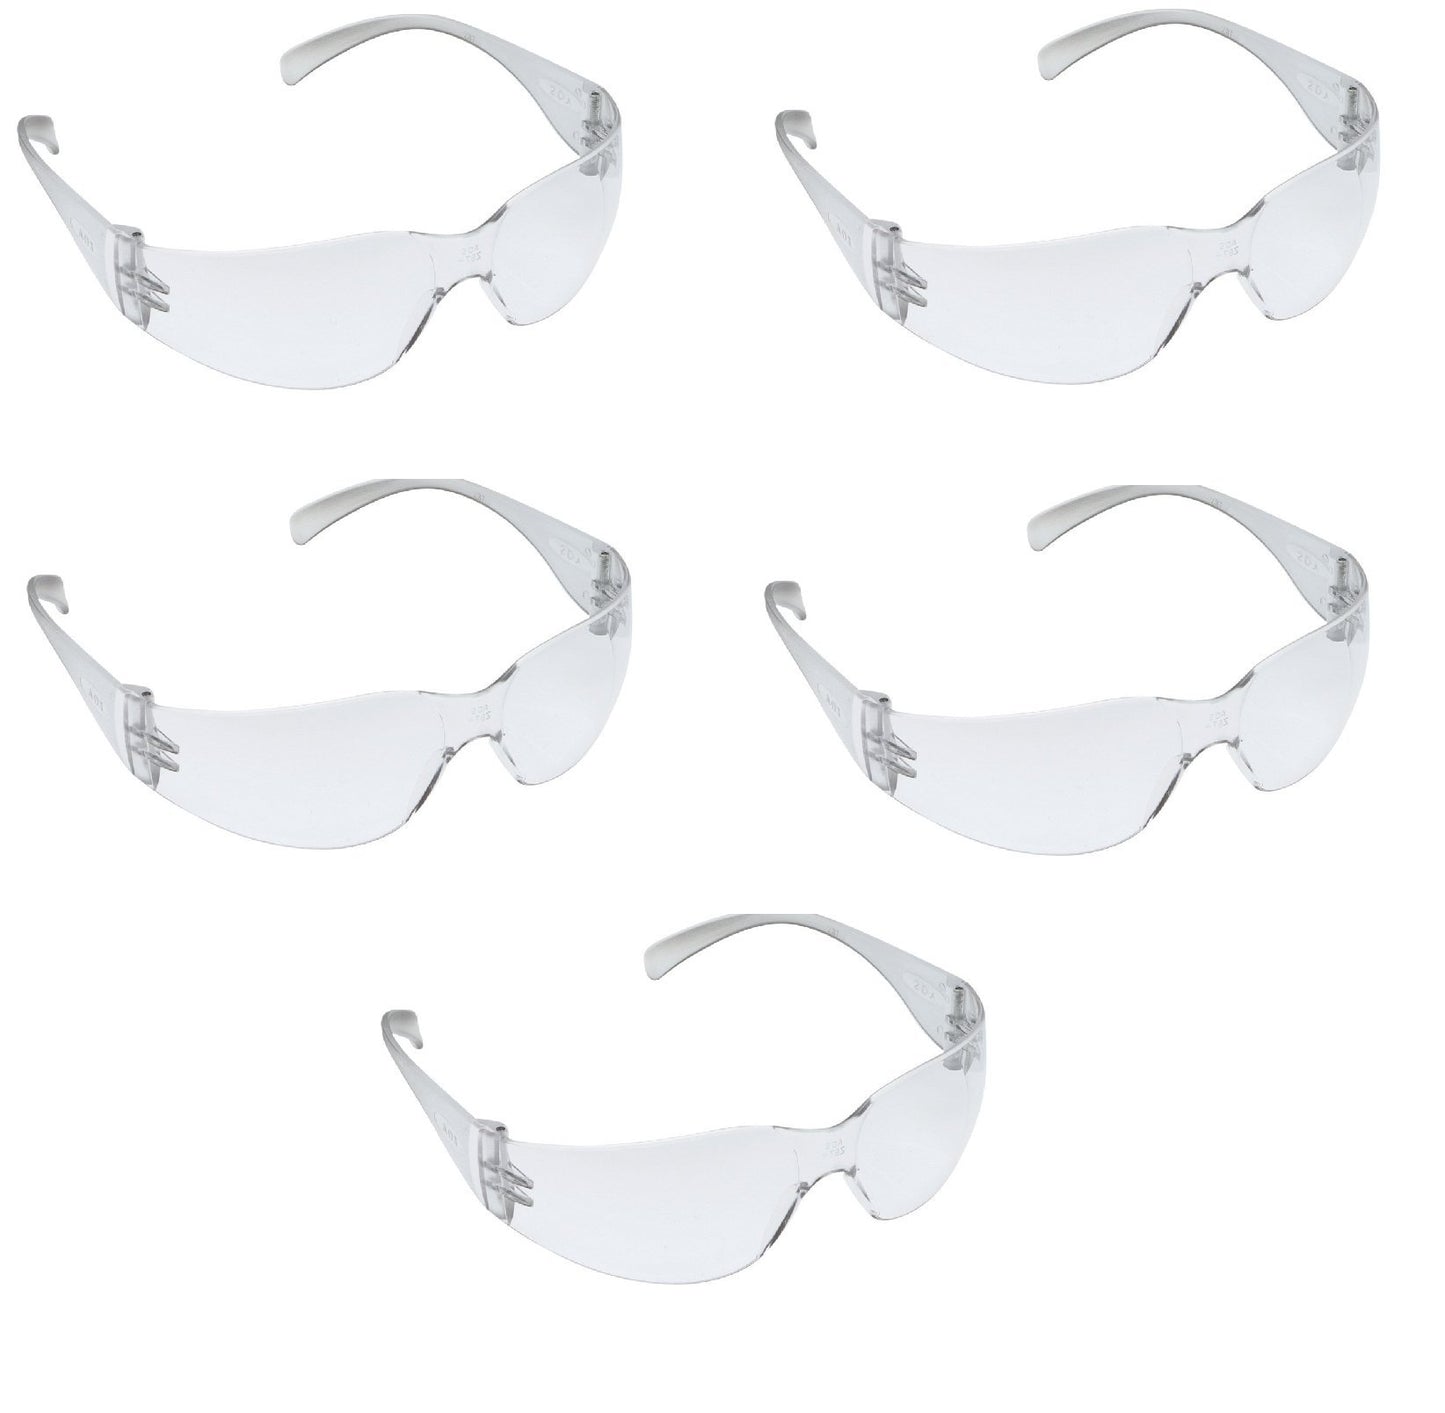 3M Tekk 11329 Virtua Anti-Fog Safety Glasses, Clear Frame, Clear Lens, 5-COUNT